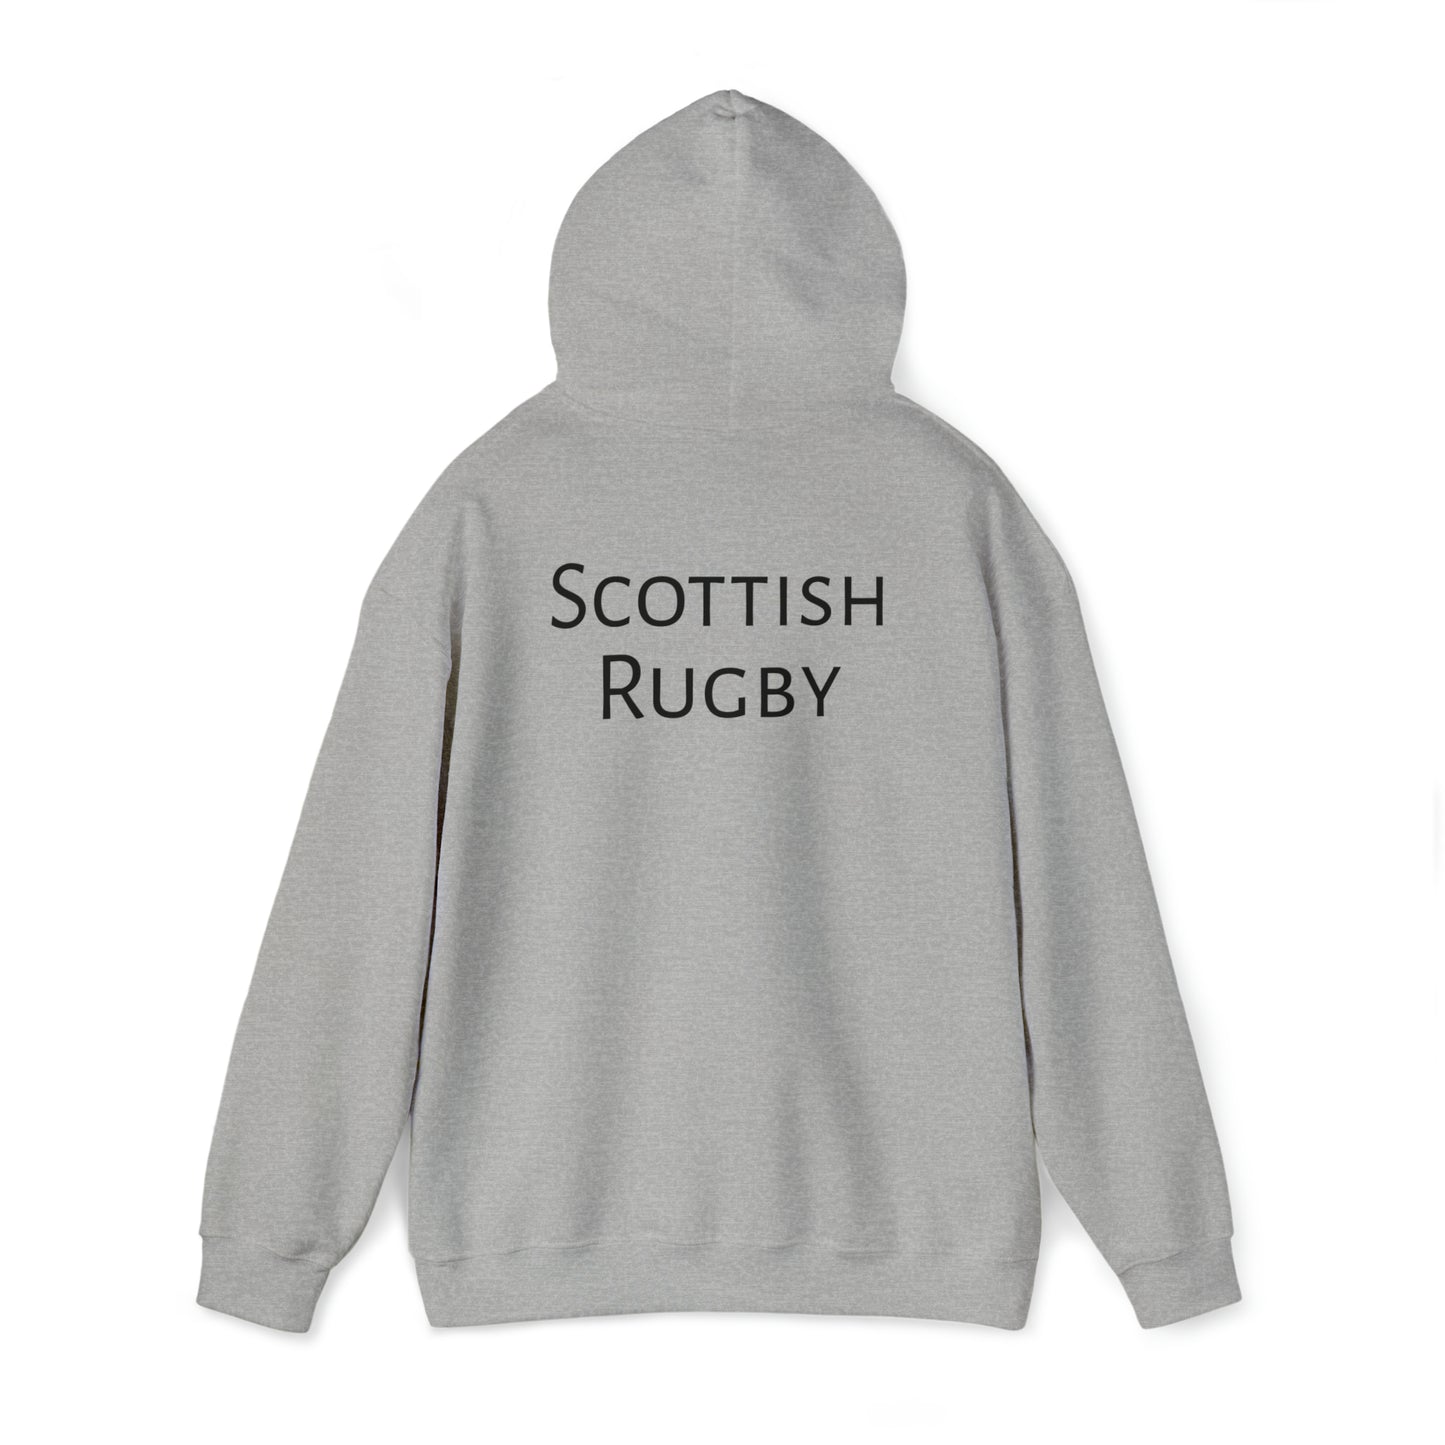 Celebrating Scotland - light hoodies